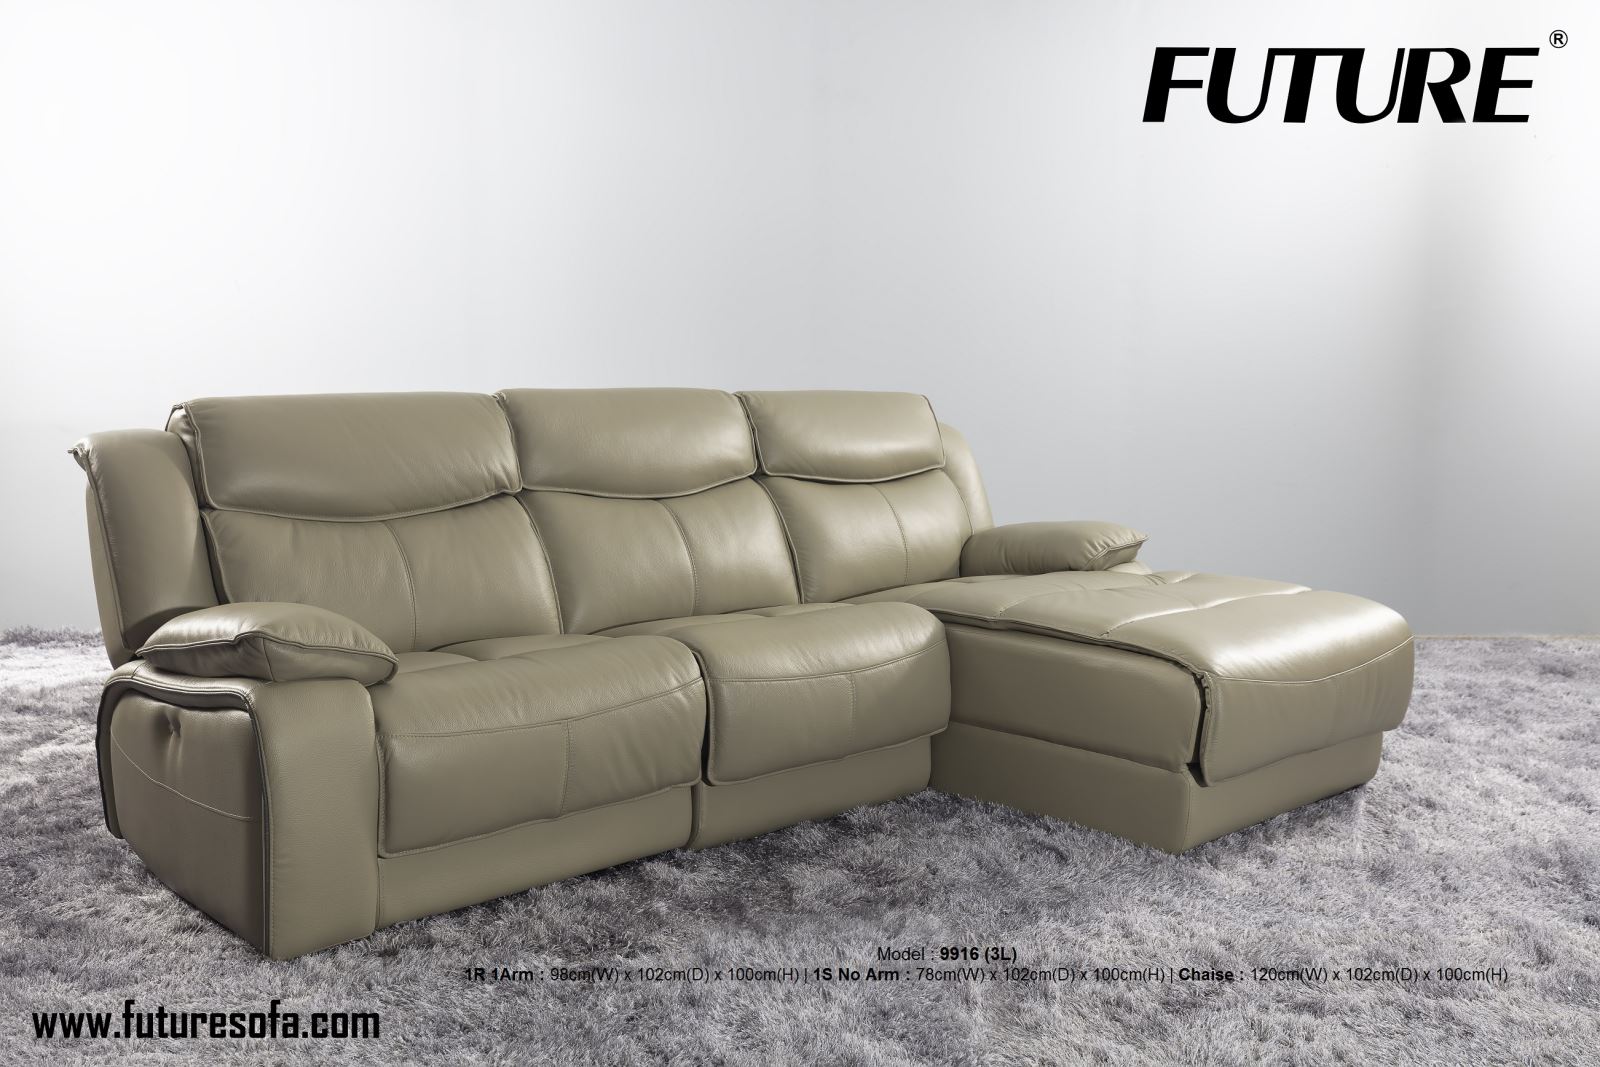 Sofa da chữ L Future Model 9916 3L khuyến mại 40% saigonsofa.com